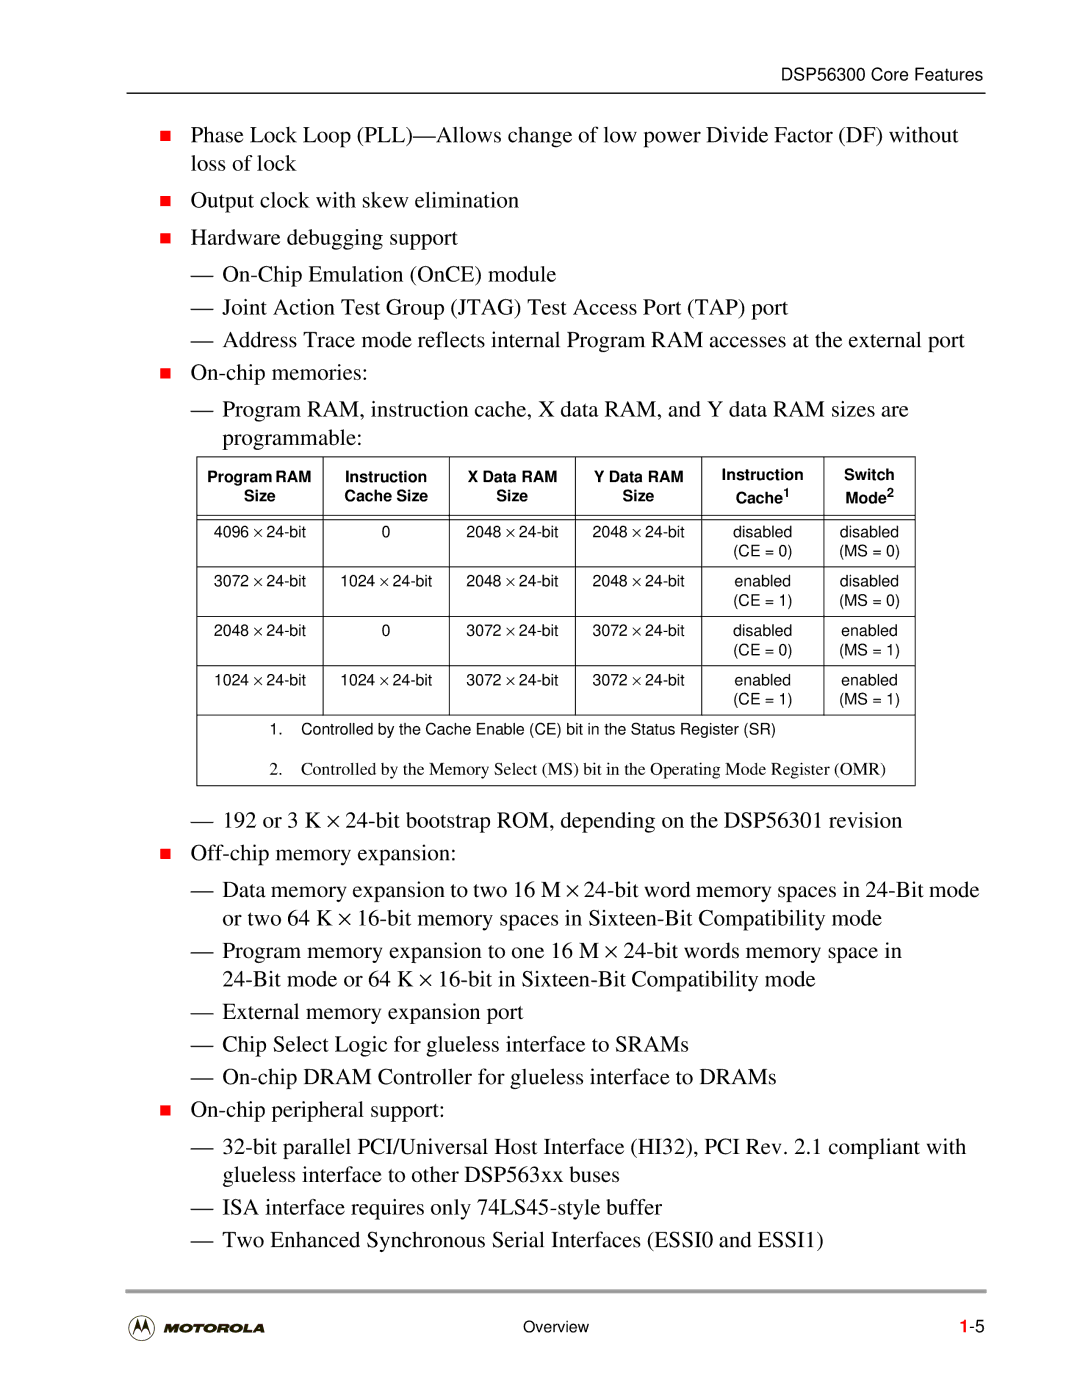 Motorola DSP56301 user manual Program RAM Instruction Data RAM Switch Size Cache Size, Ce = Ms = 